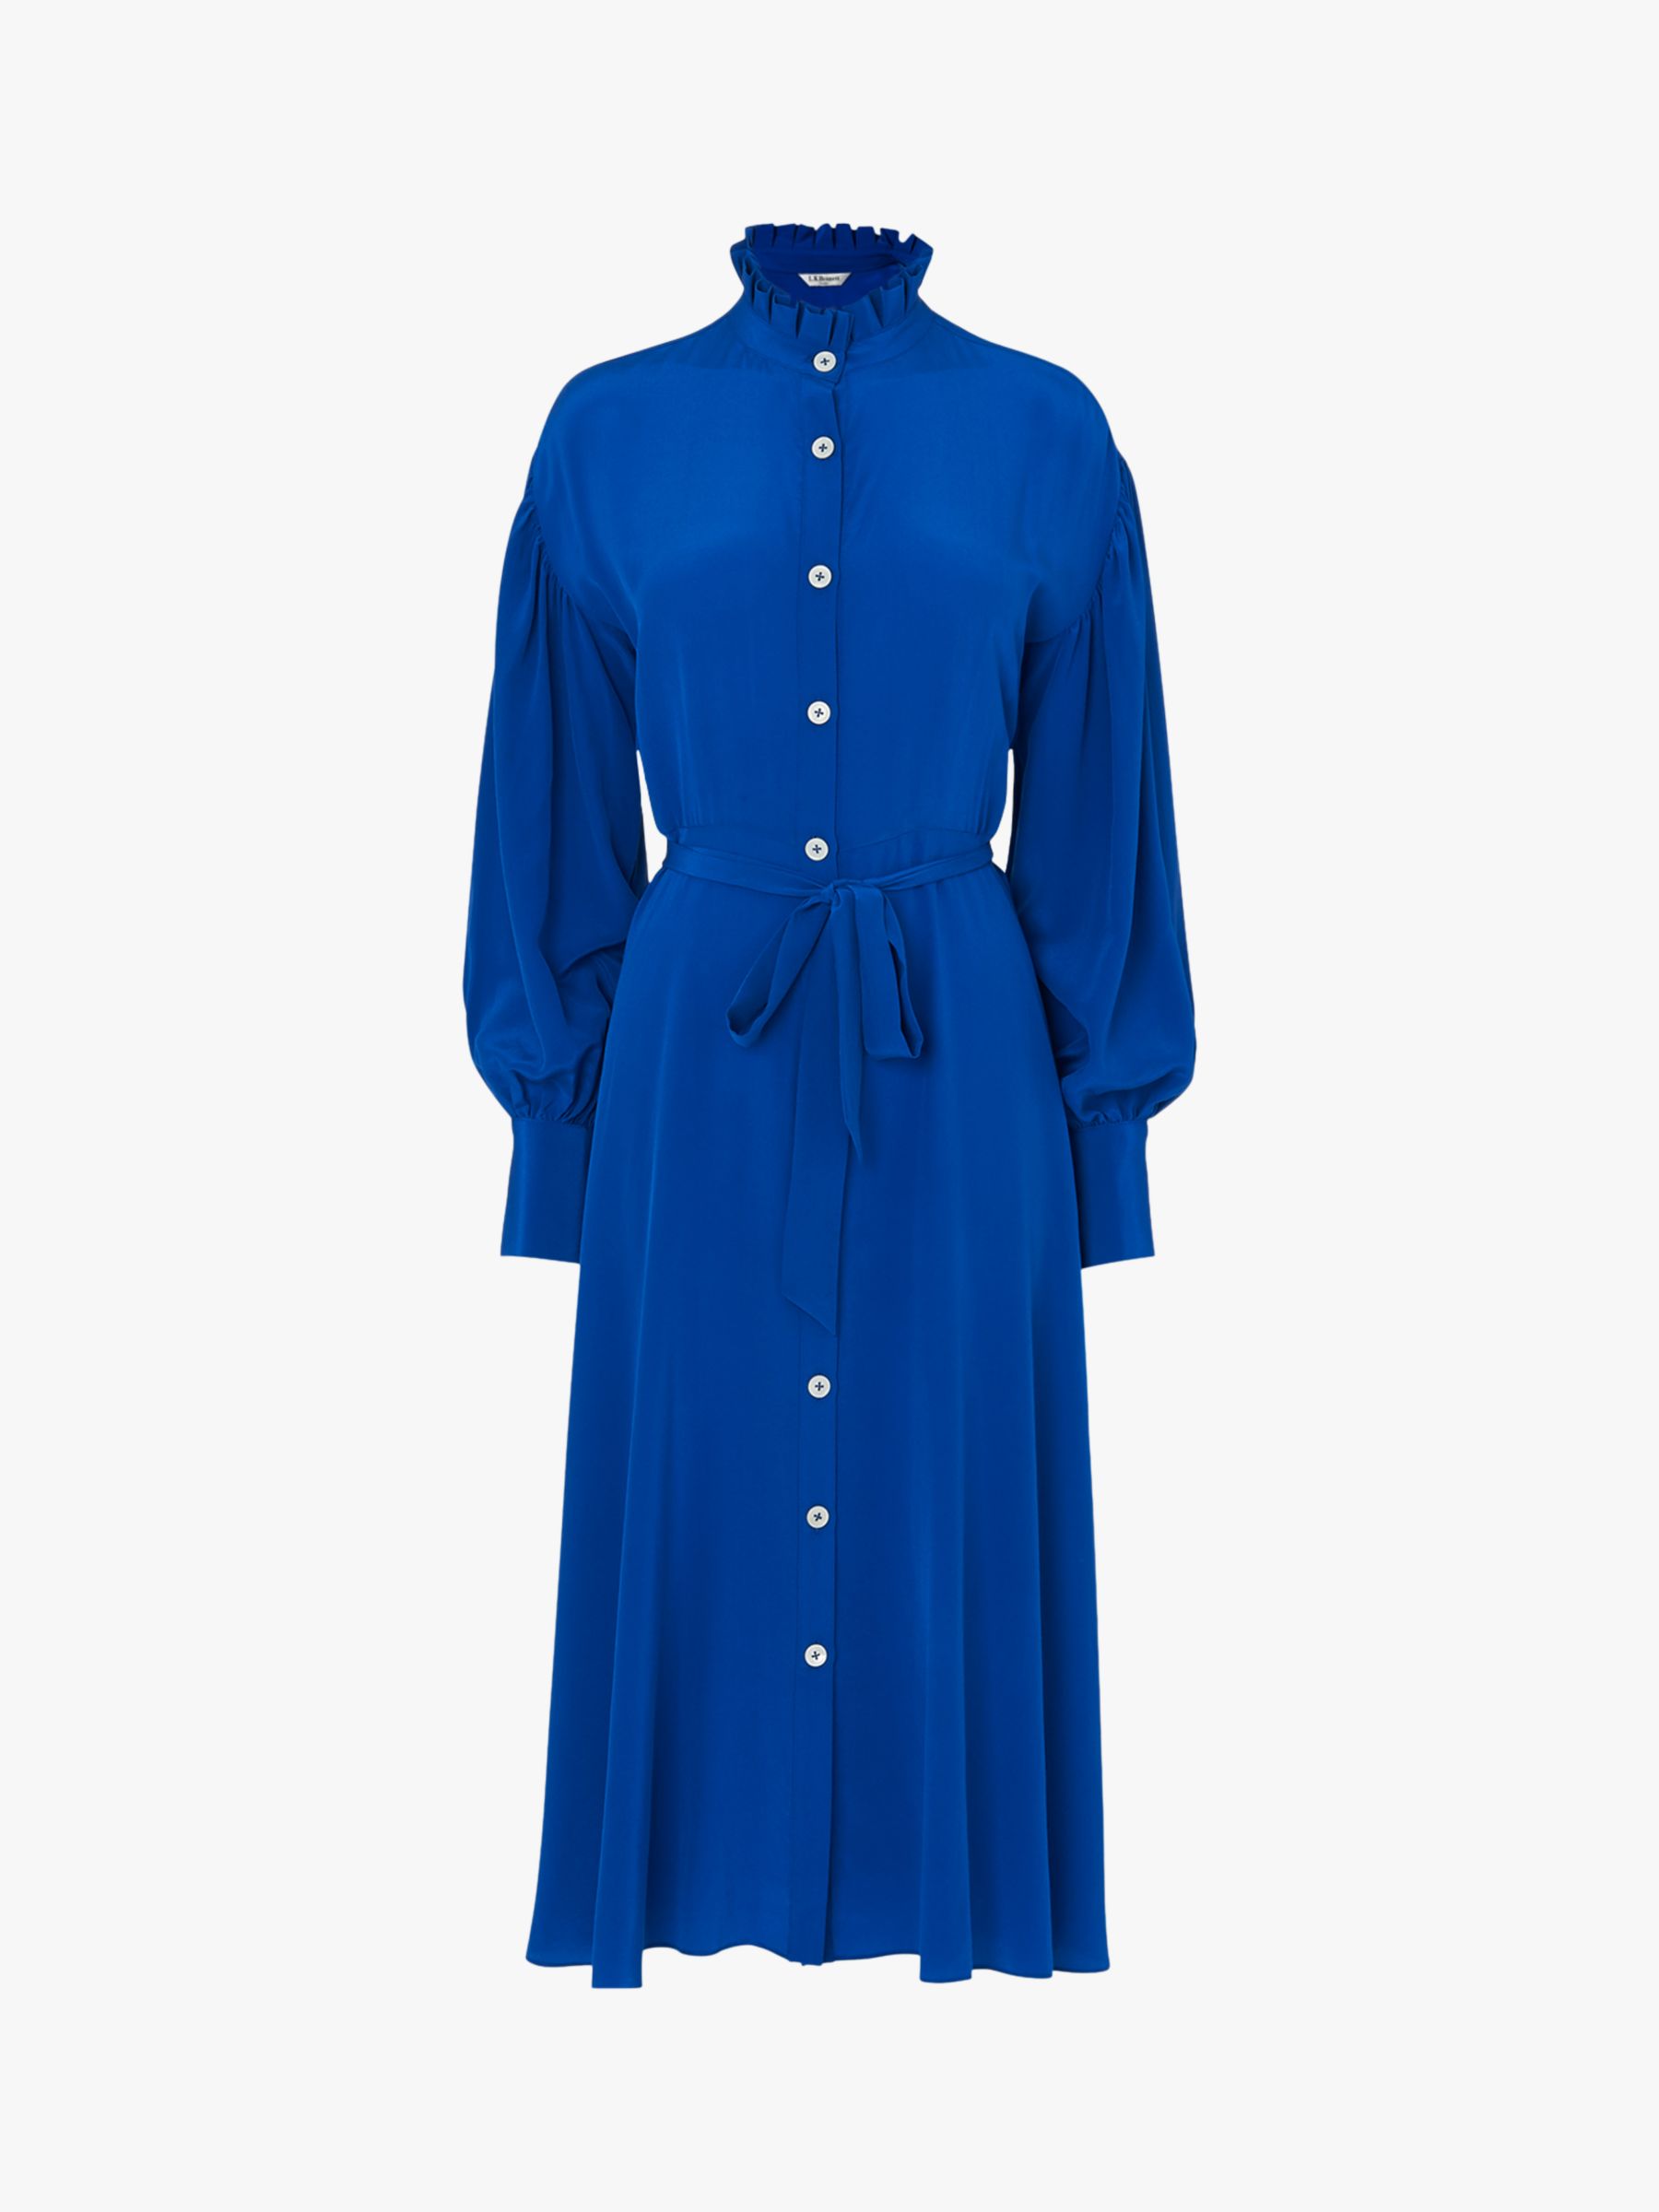 L.K.Bennett Sukey Silk Pleat Neck Shirt Dress, Royal Blue, 8